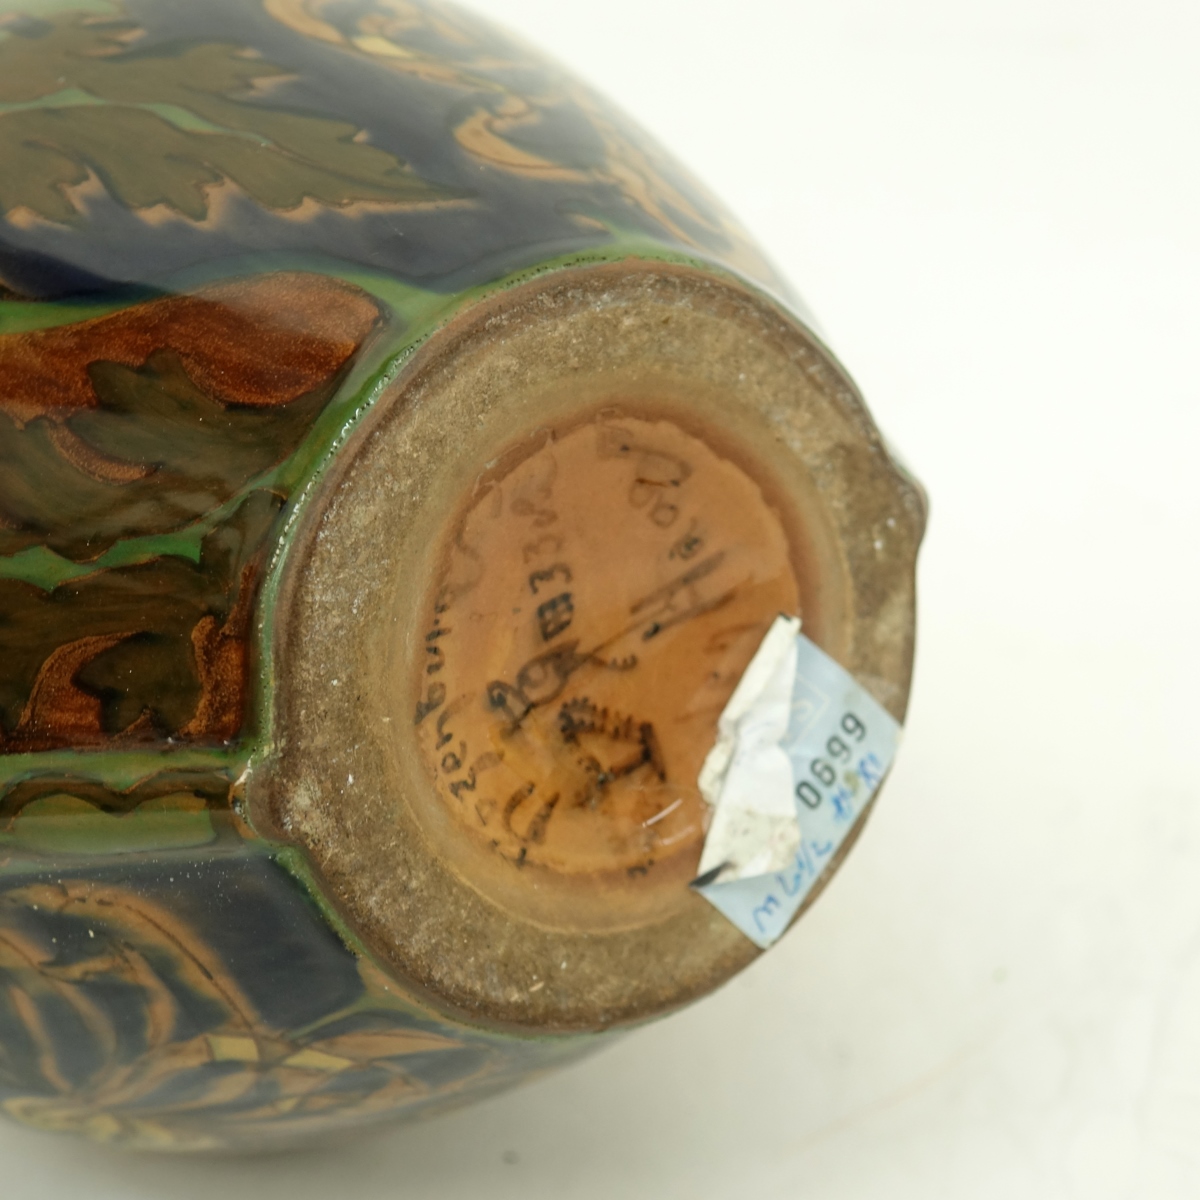 Gouda Art Deco Pottery Vase with Handle